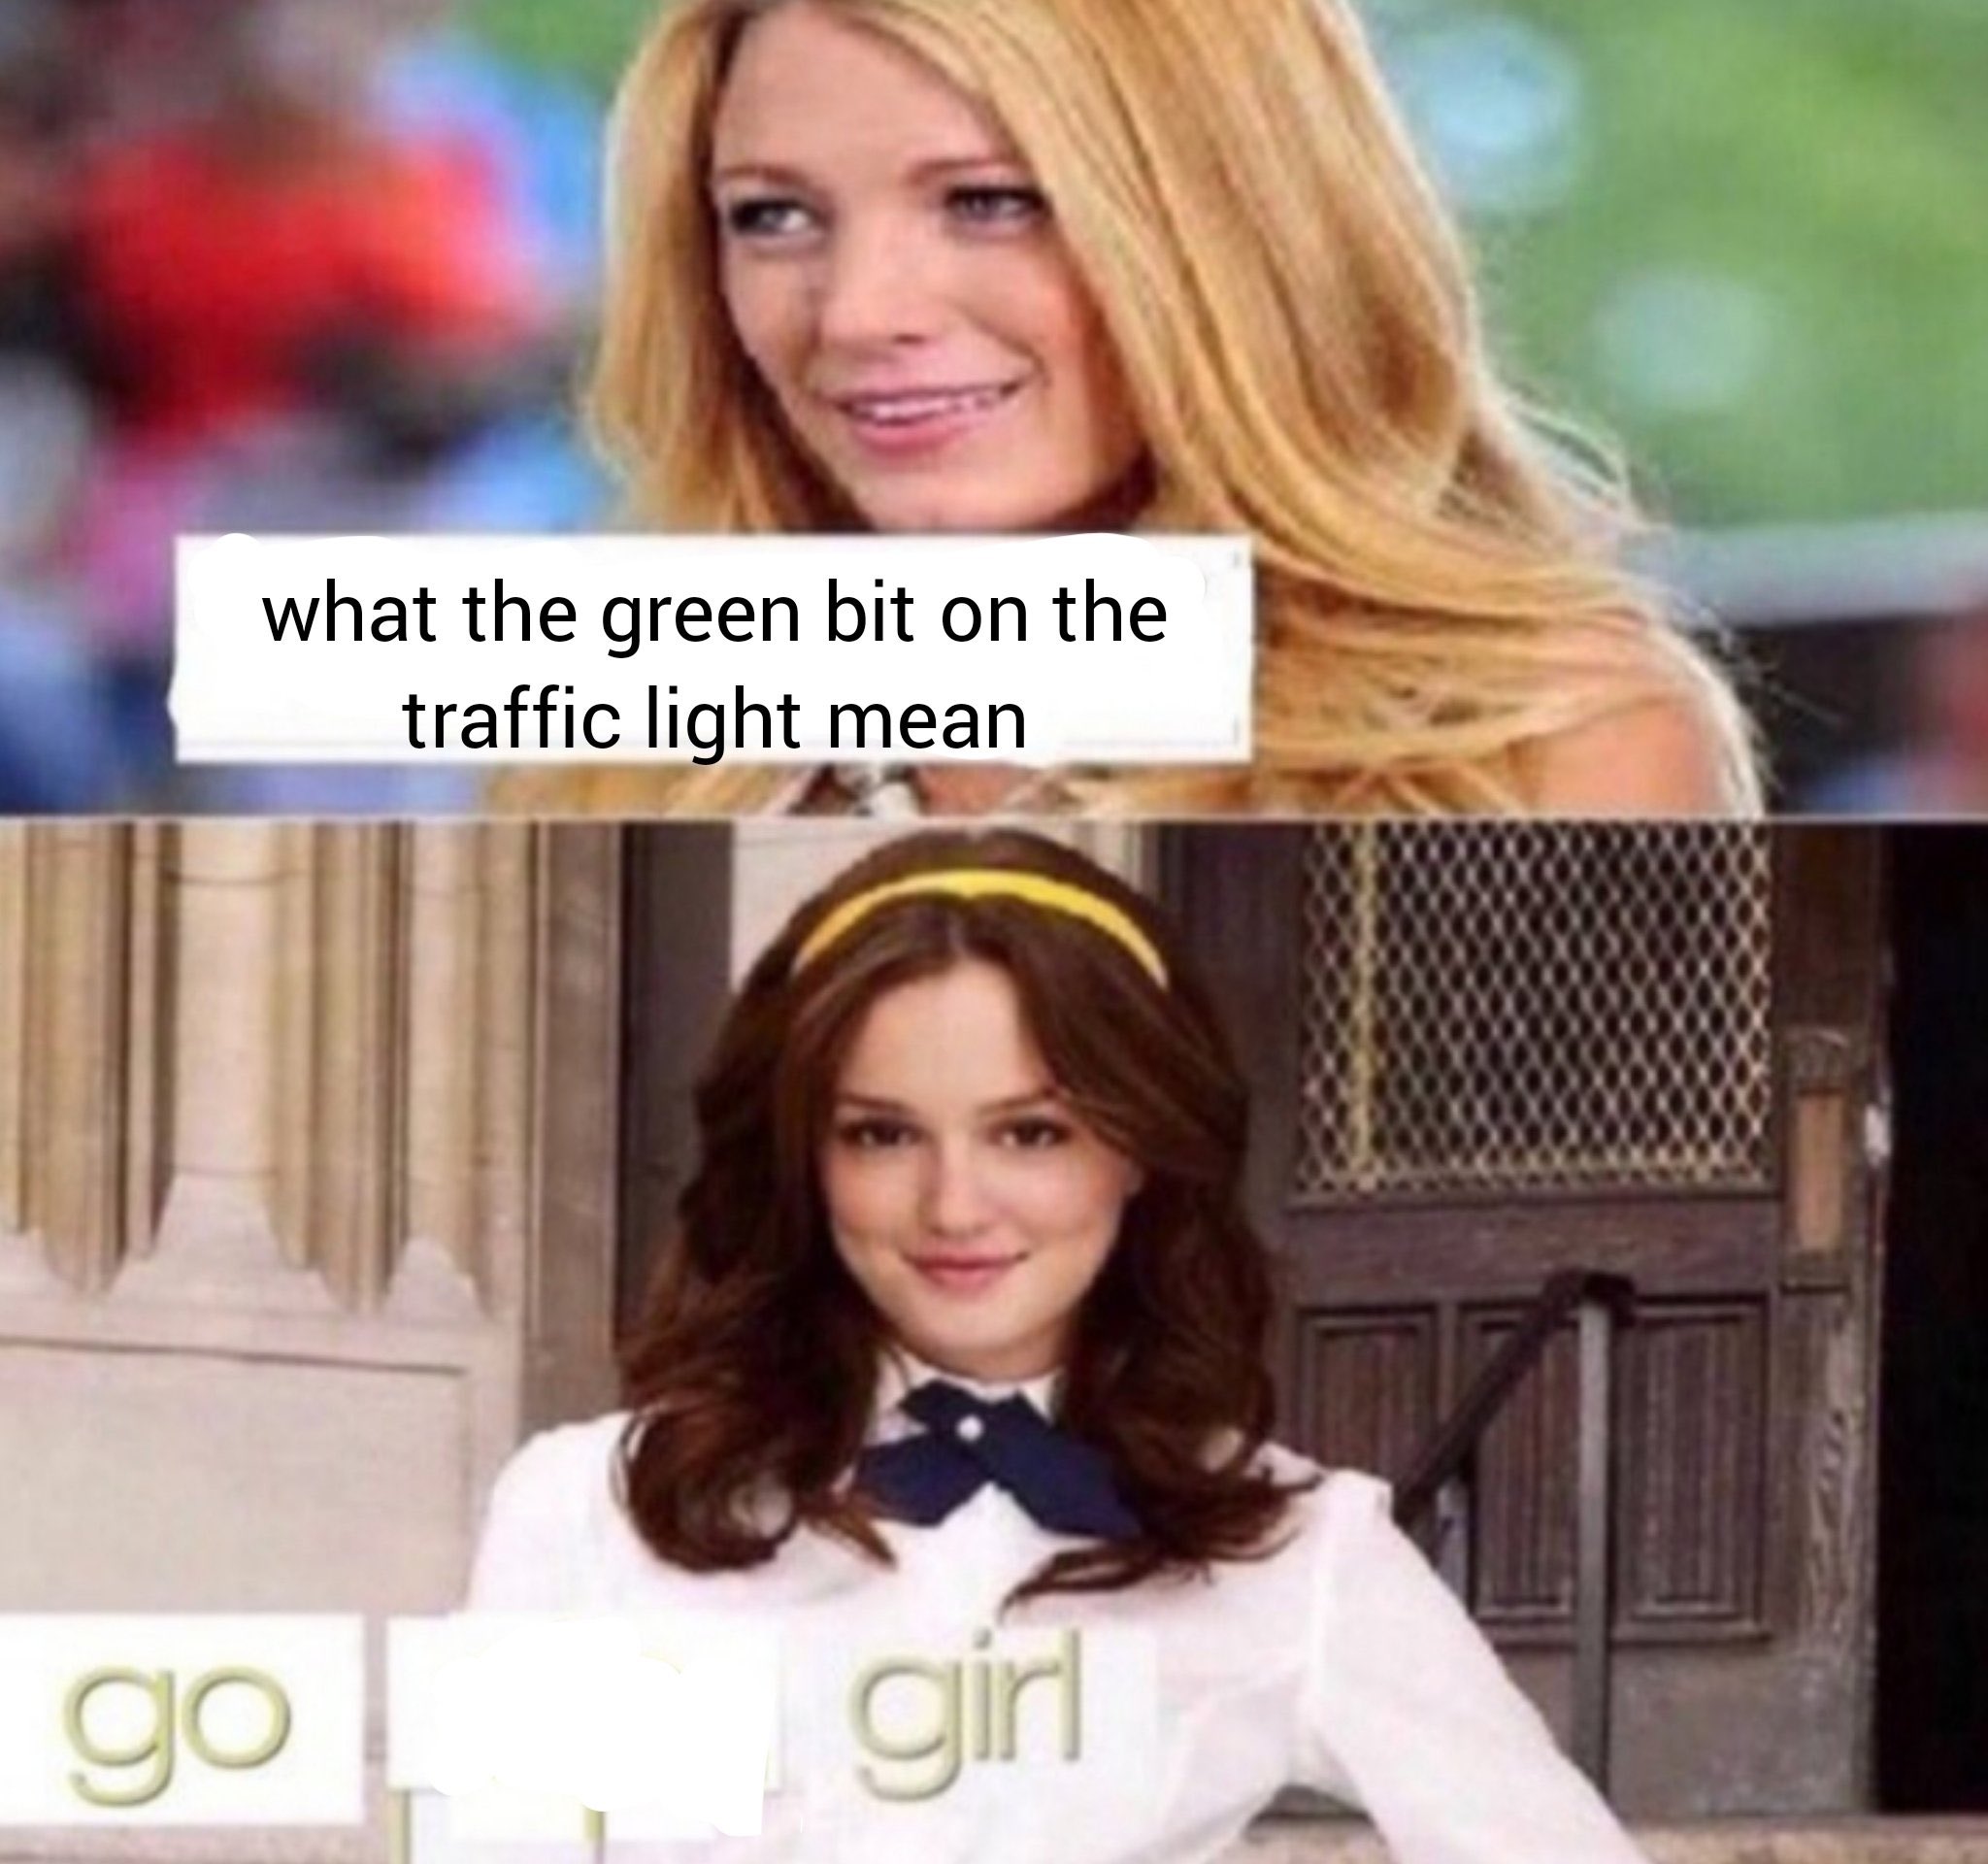 meme - blair waldorf gossip girl - what the green bit on the traffic light mean go gint